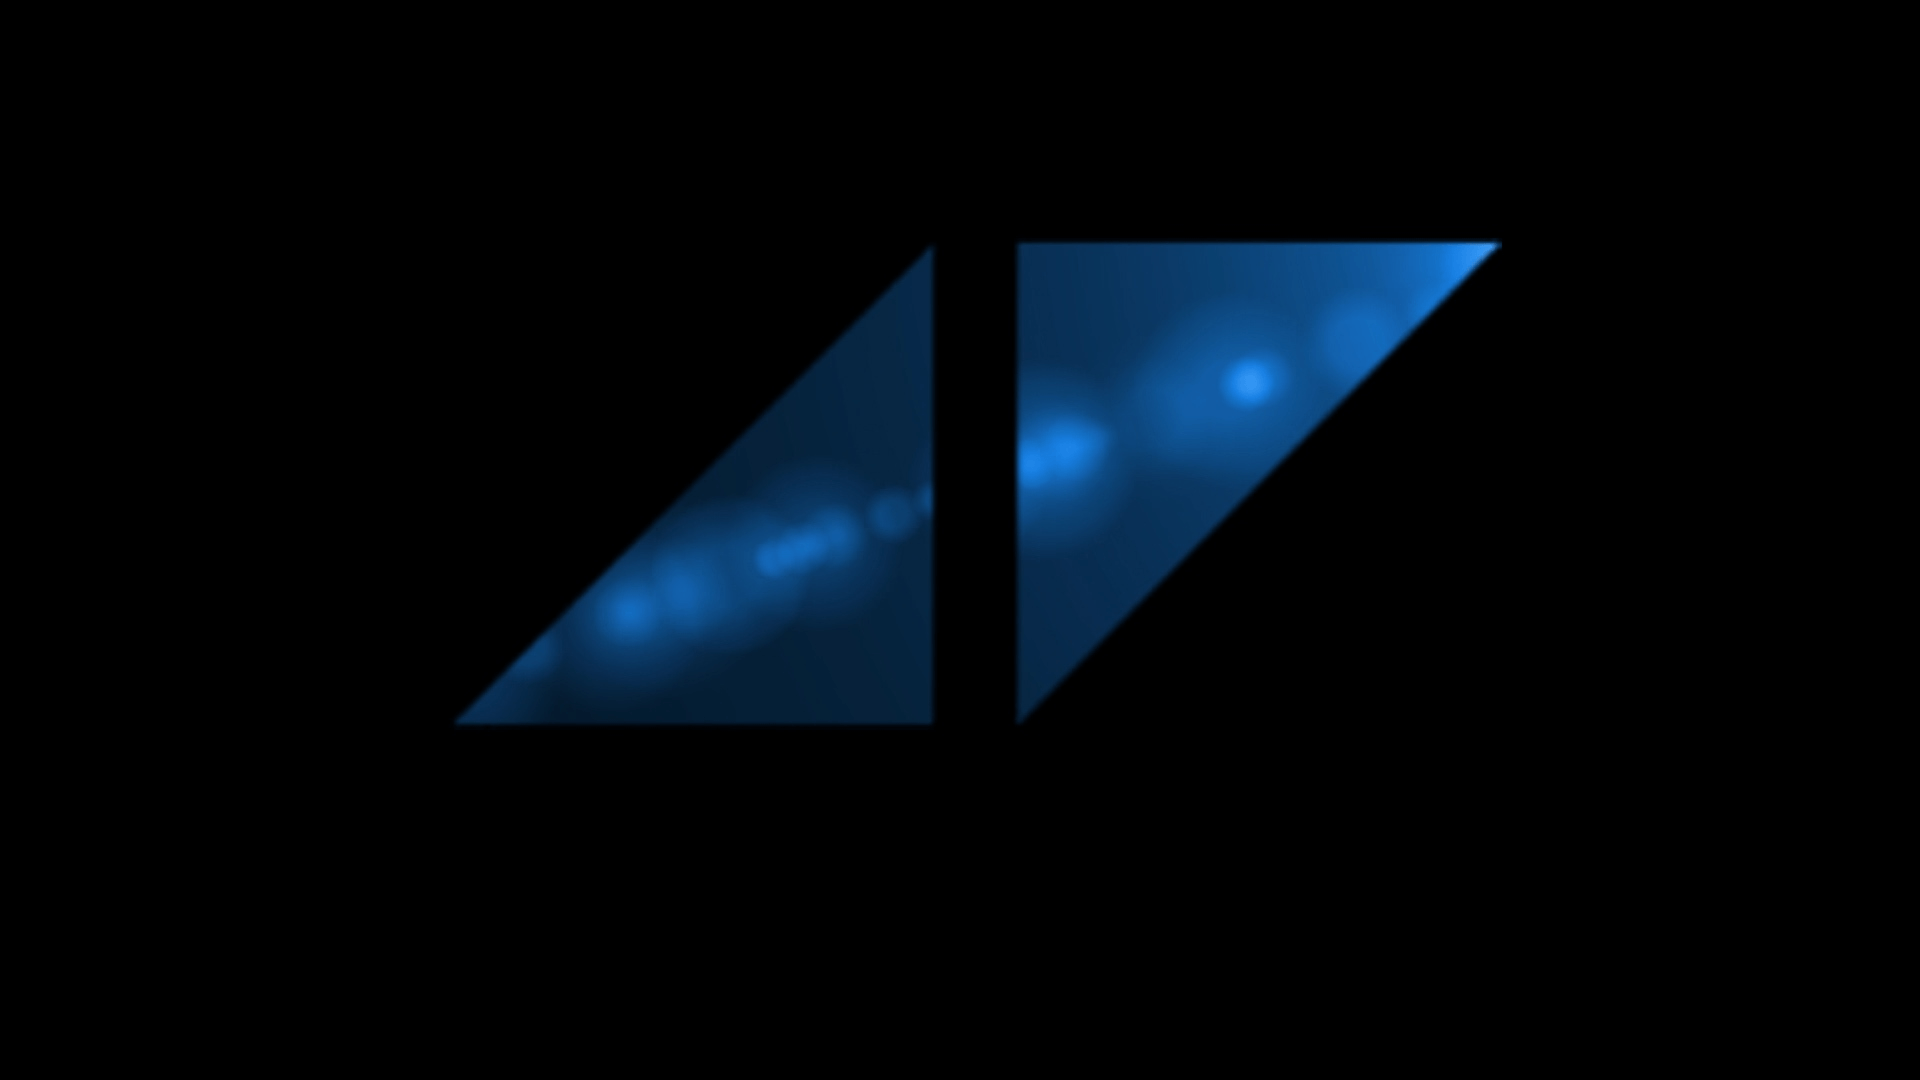 Dark Avicii Logo Wallpaper for Phone and HD Desktop Background